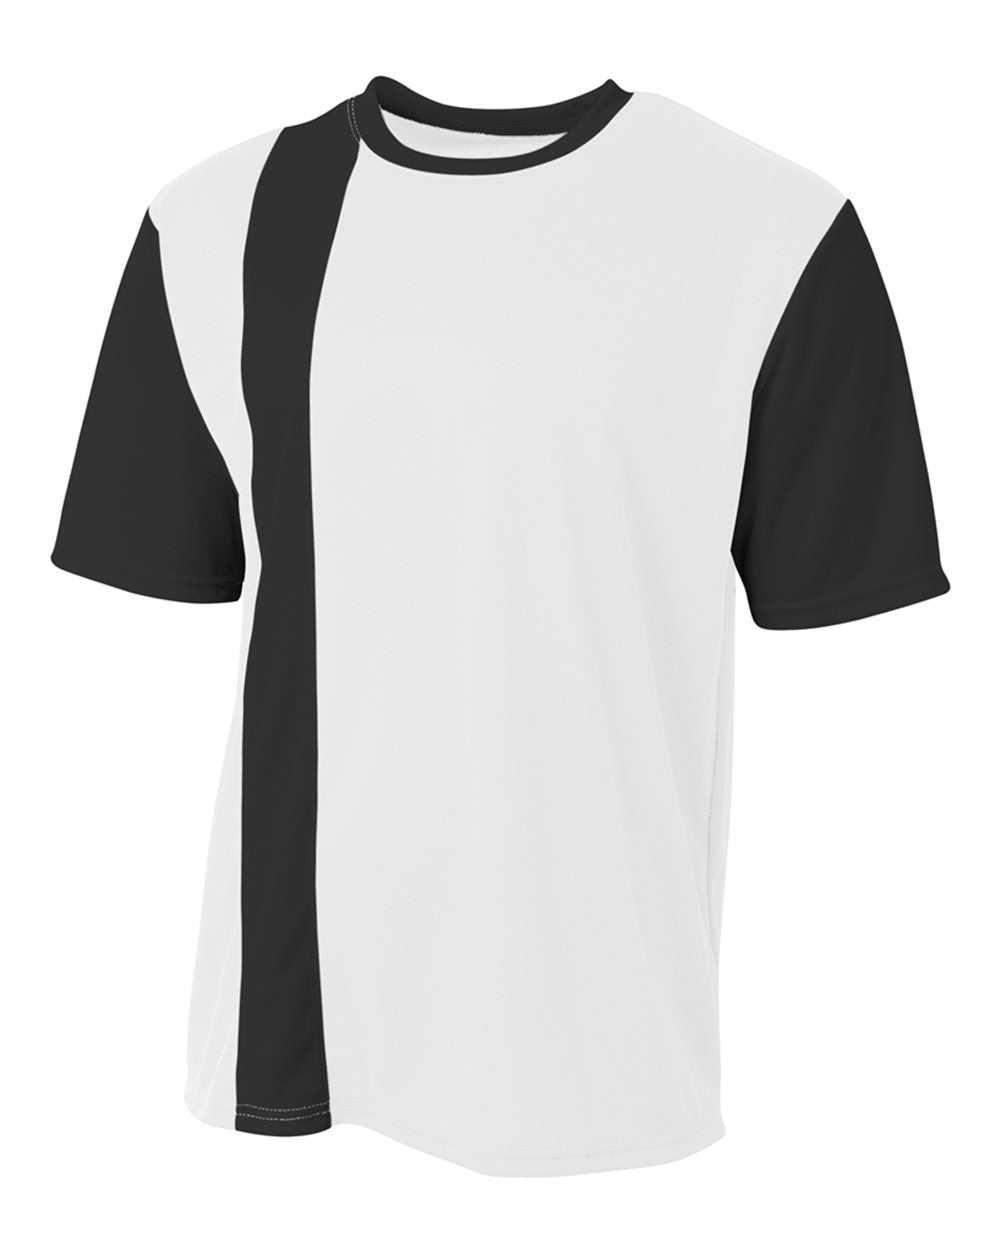 A4 N3016 Legend Soccer Jersey - White Black - HIT a Double